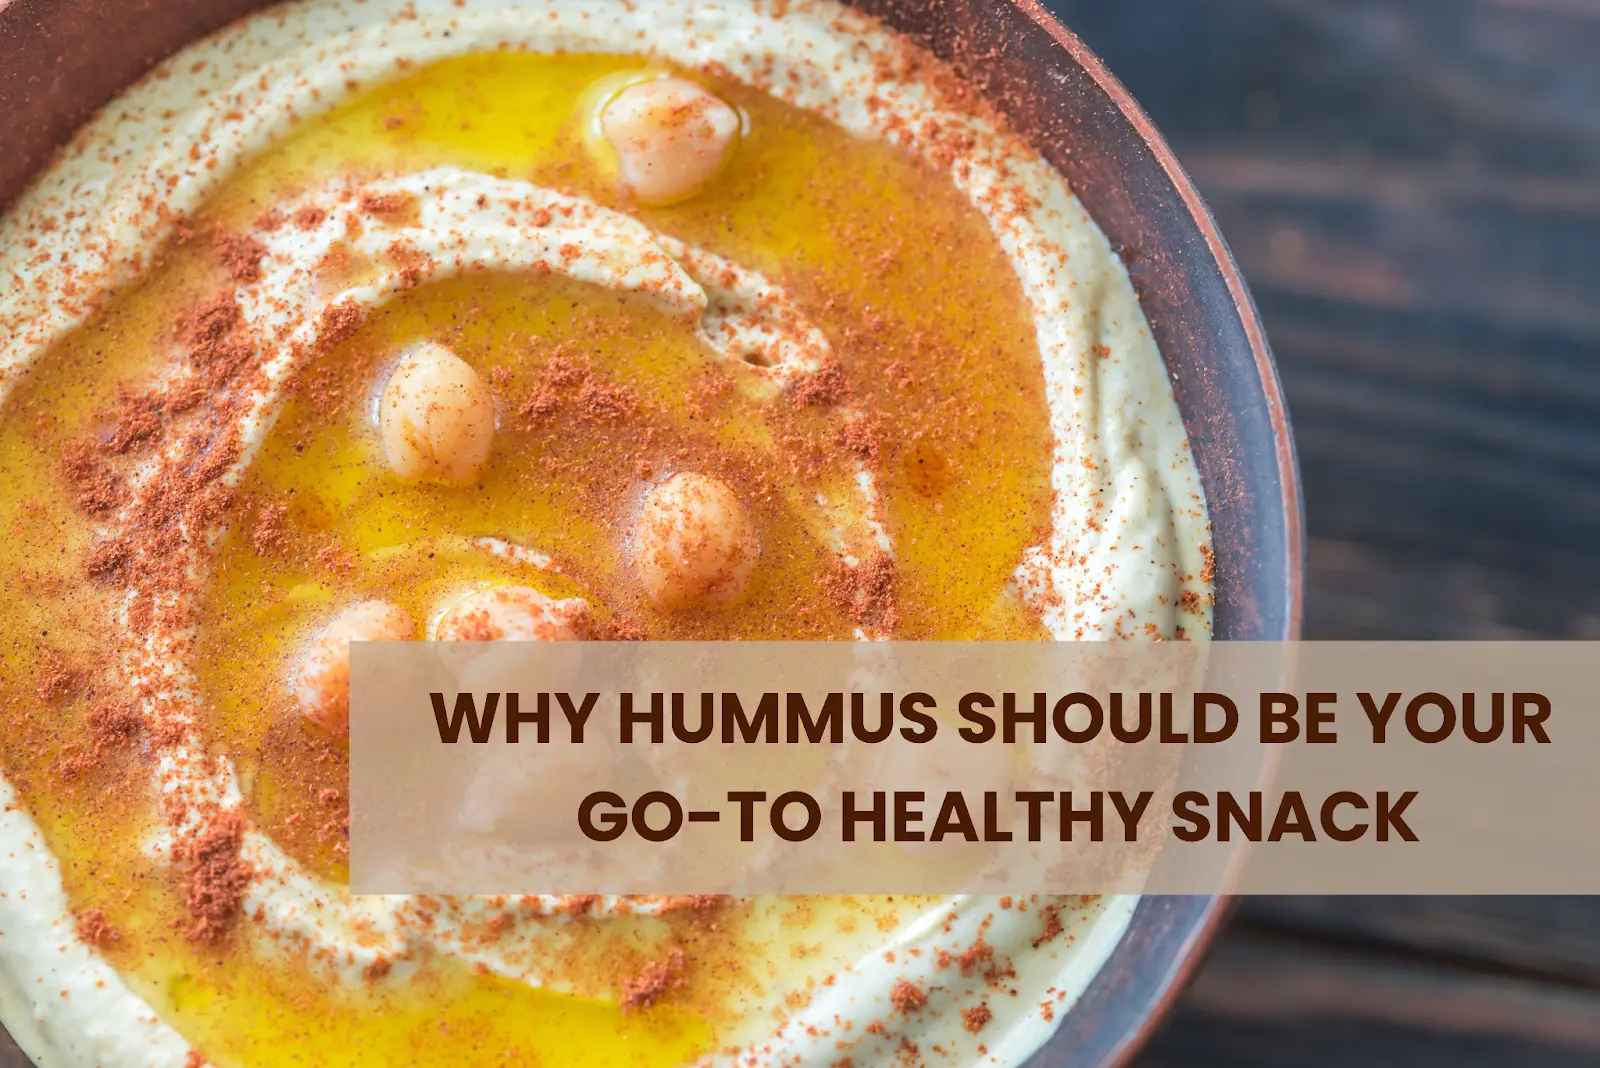 the delicious hummus healthy snack are heart-healthy foods